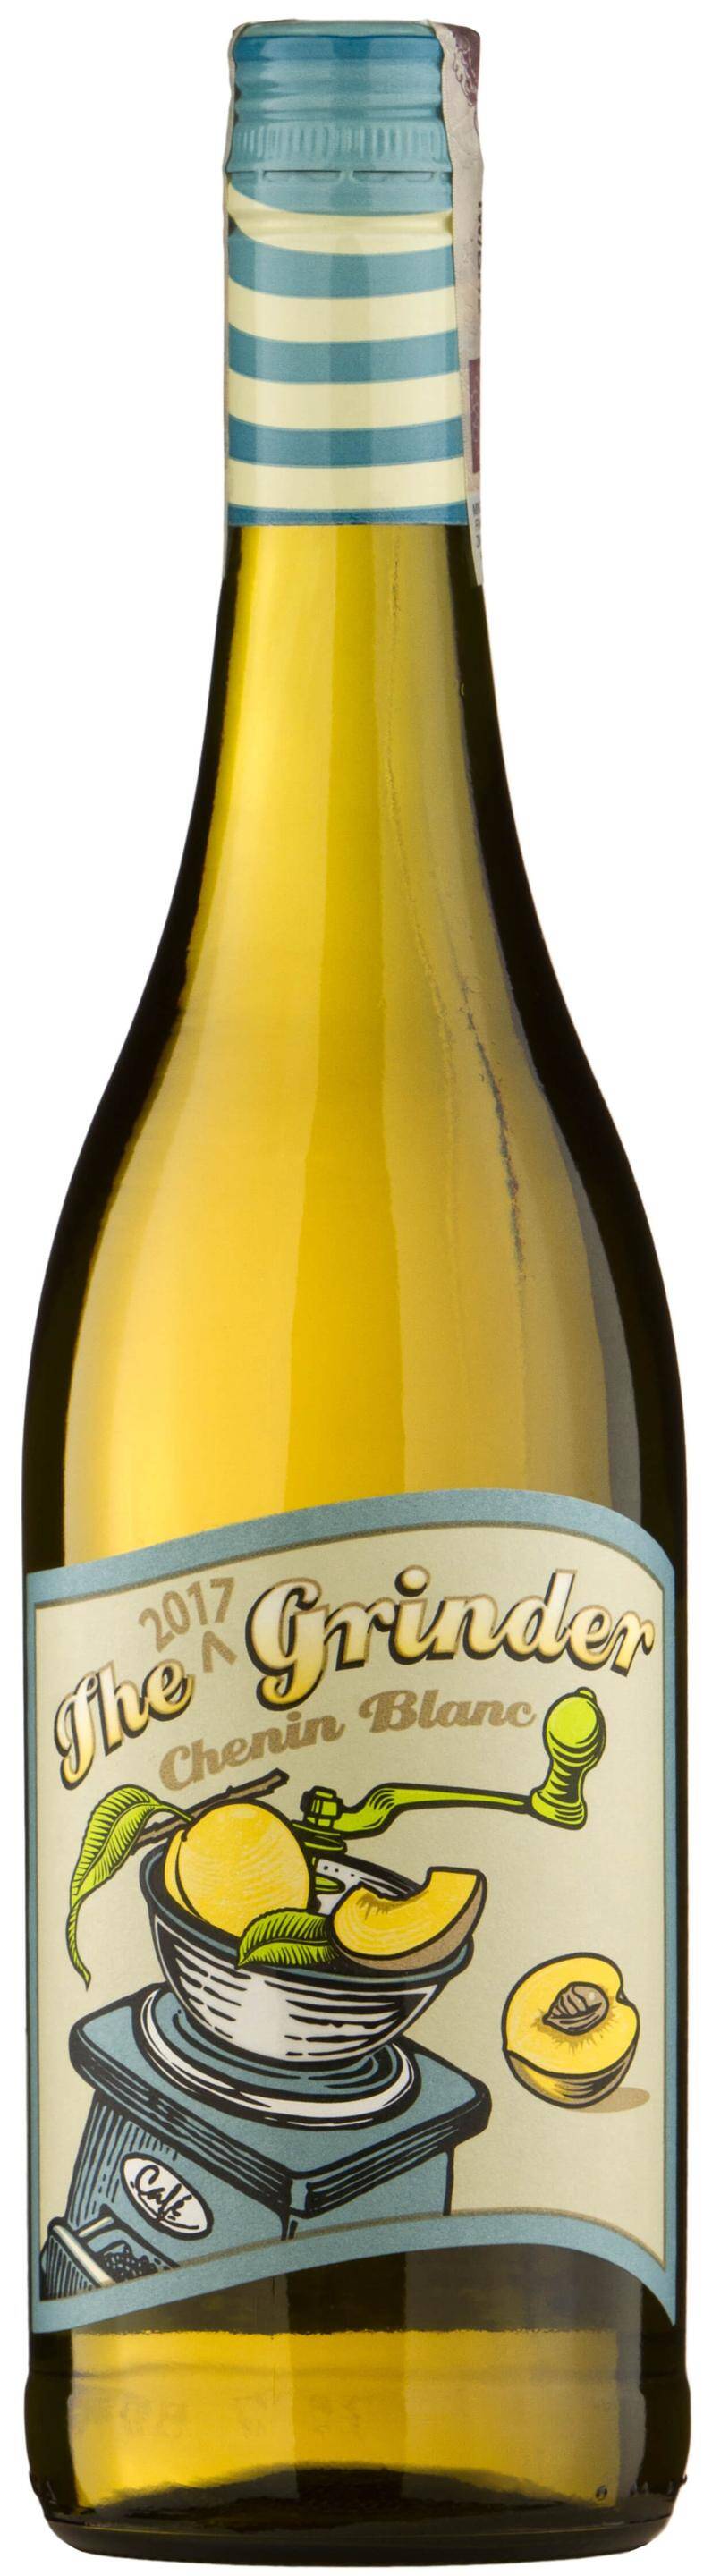 Wino RPA The Grinder Chenin blanc 12,5% BW 750ml/12